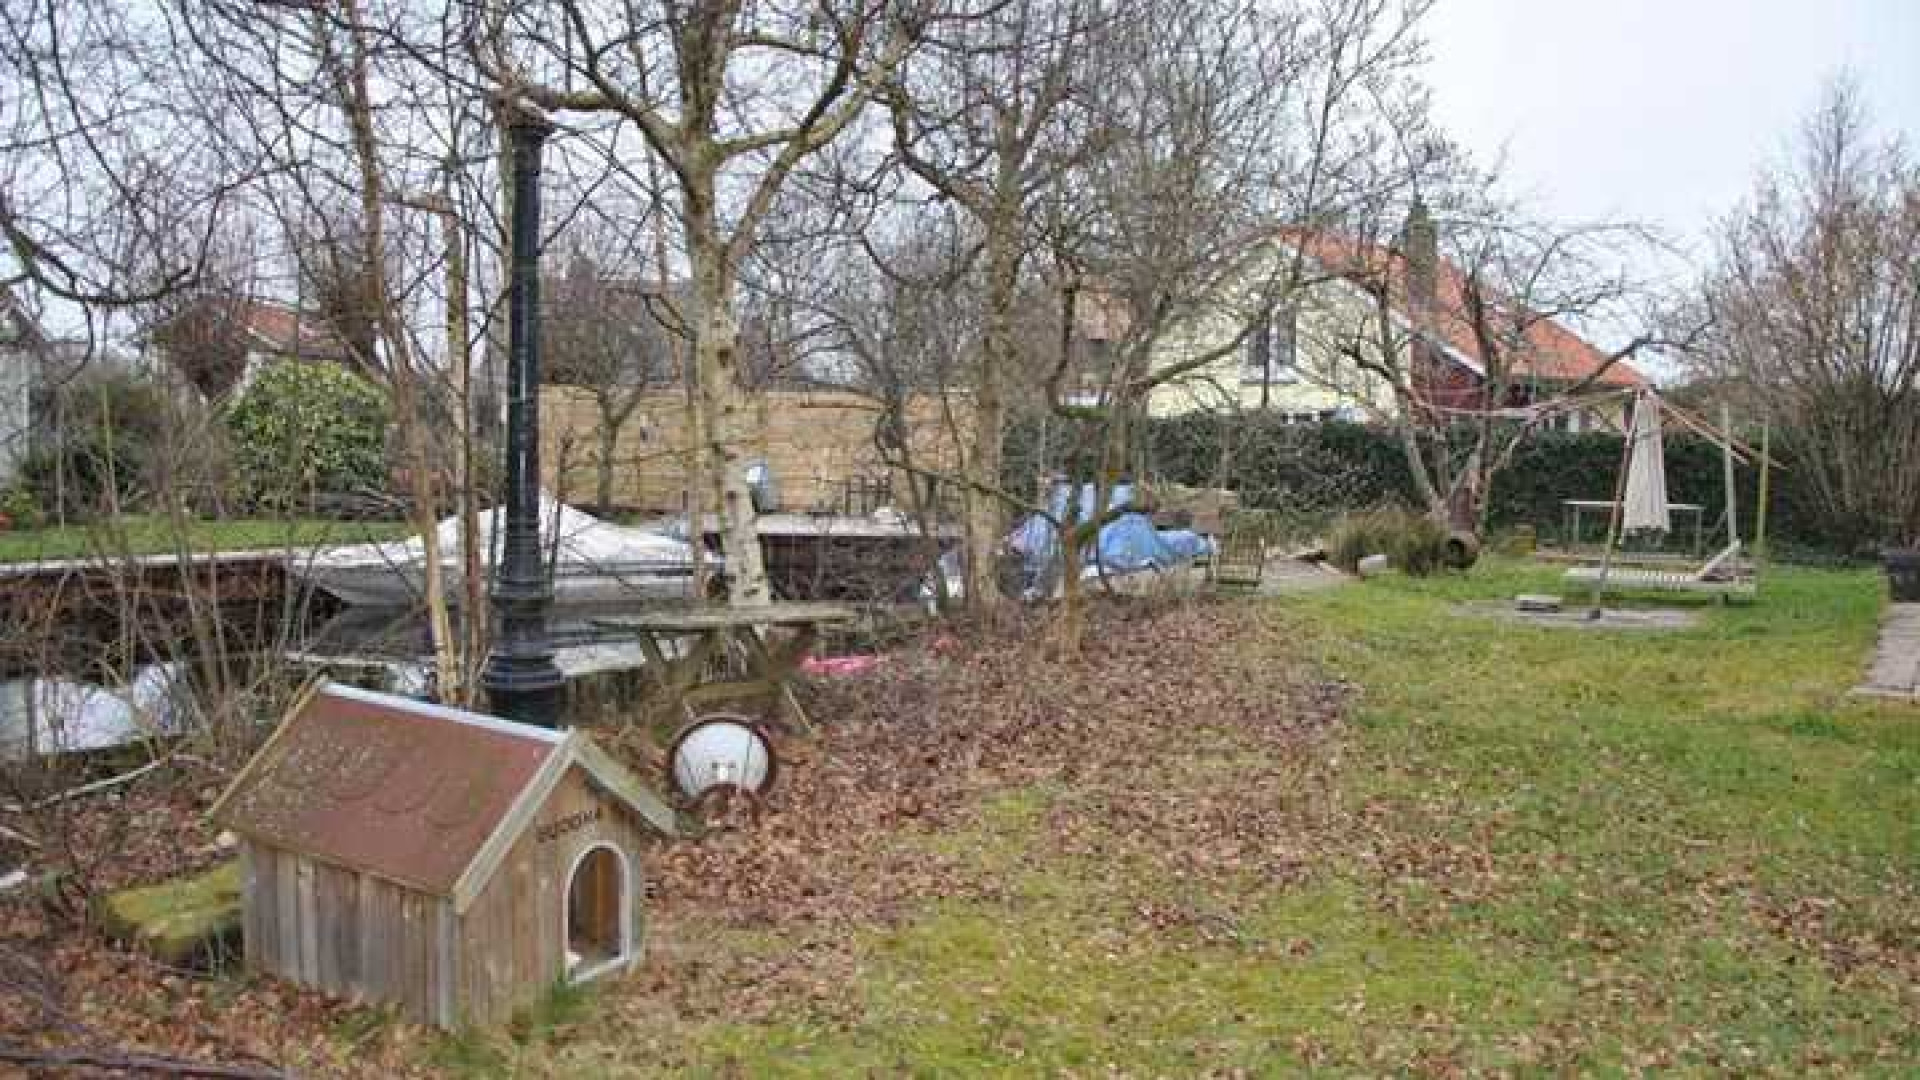 Huis Kimberley Klaver in Vinkeveen te koop. Zie foto's